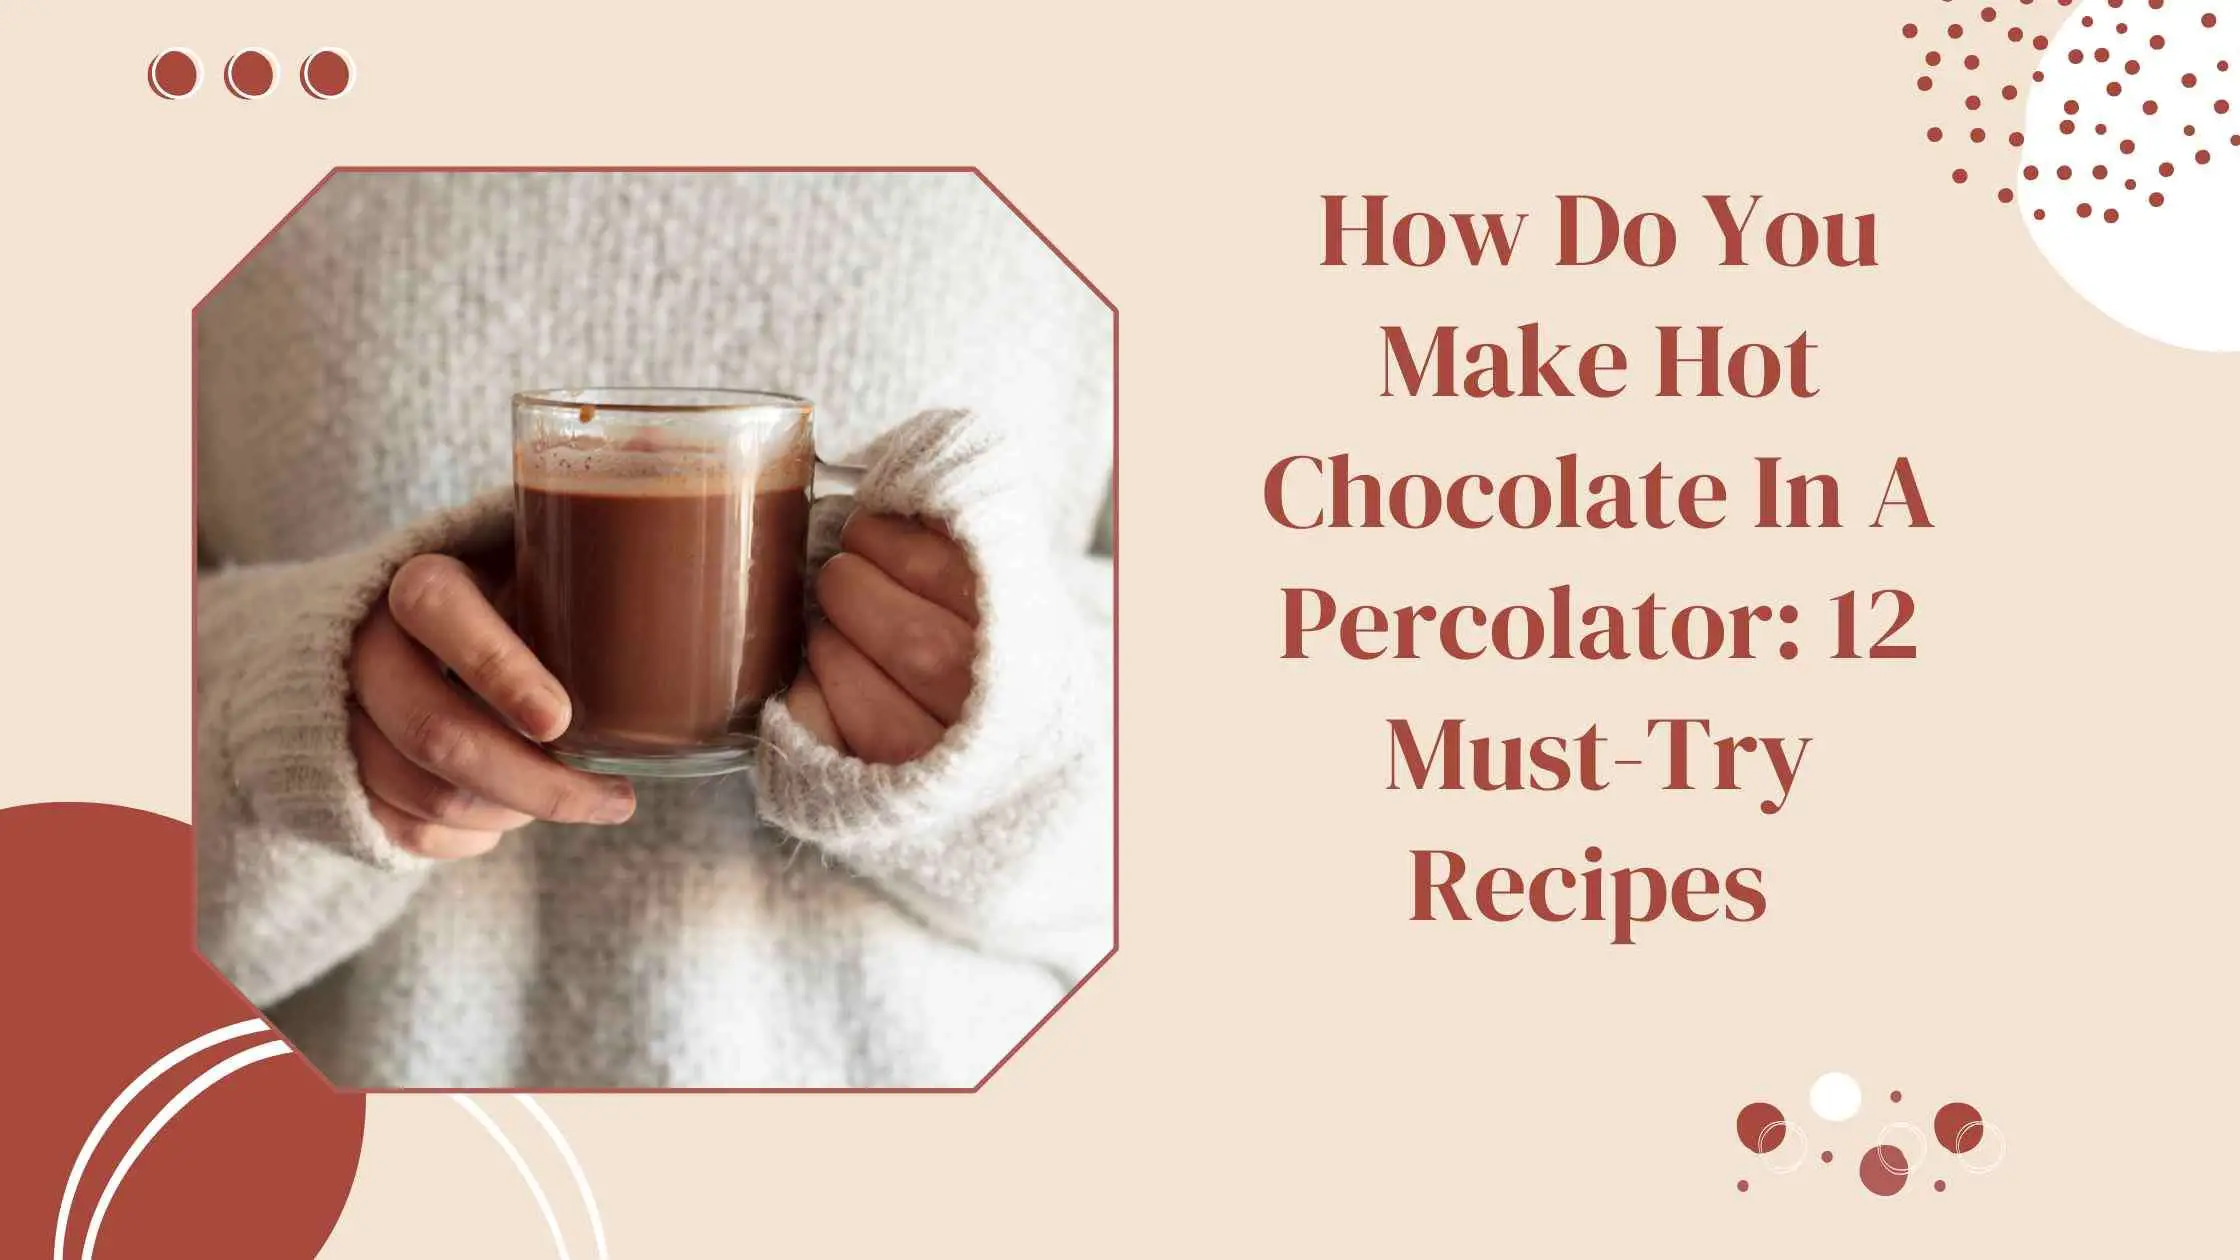 How do you make hot chocolate in a percolator?